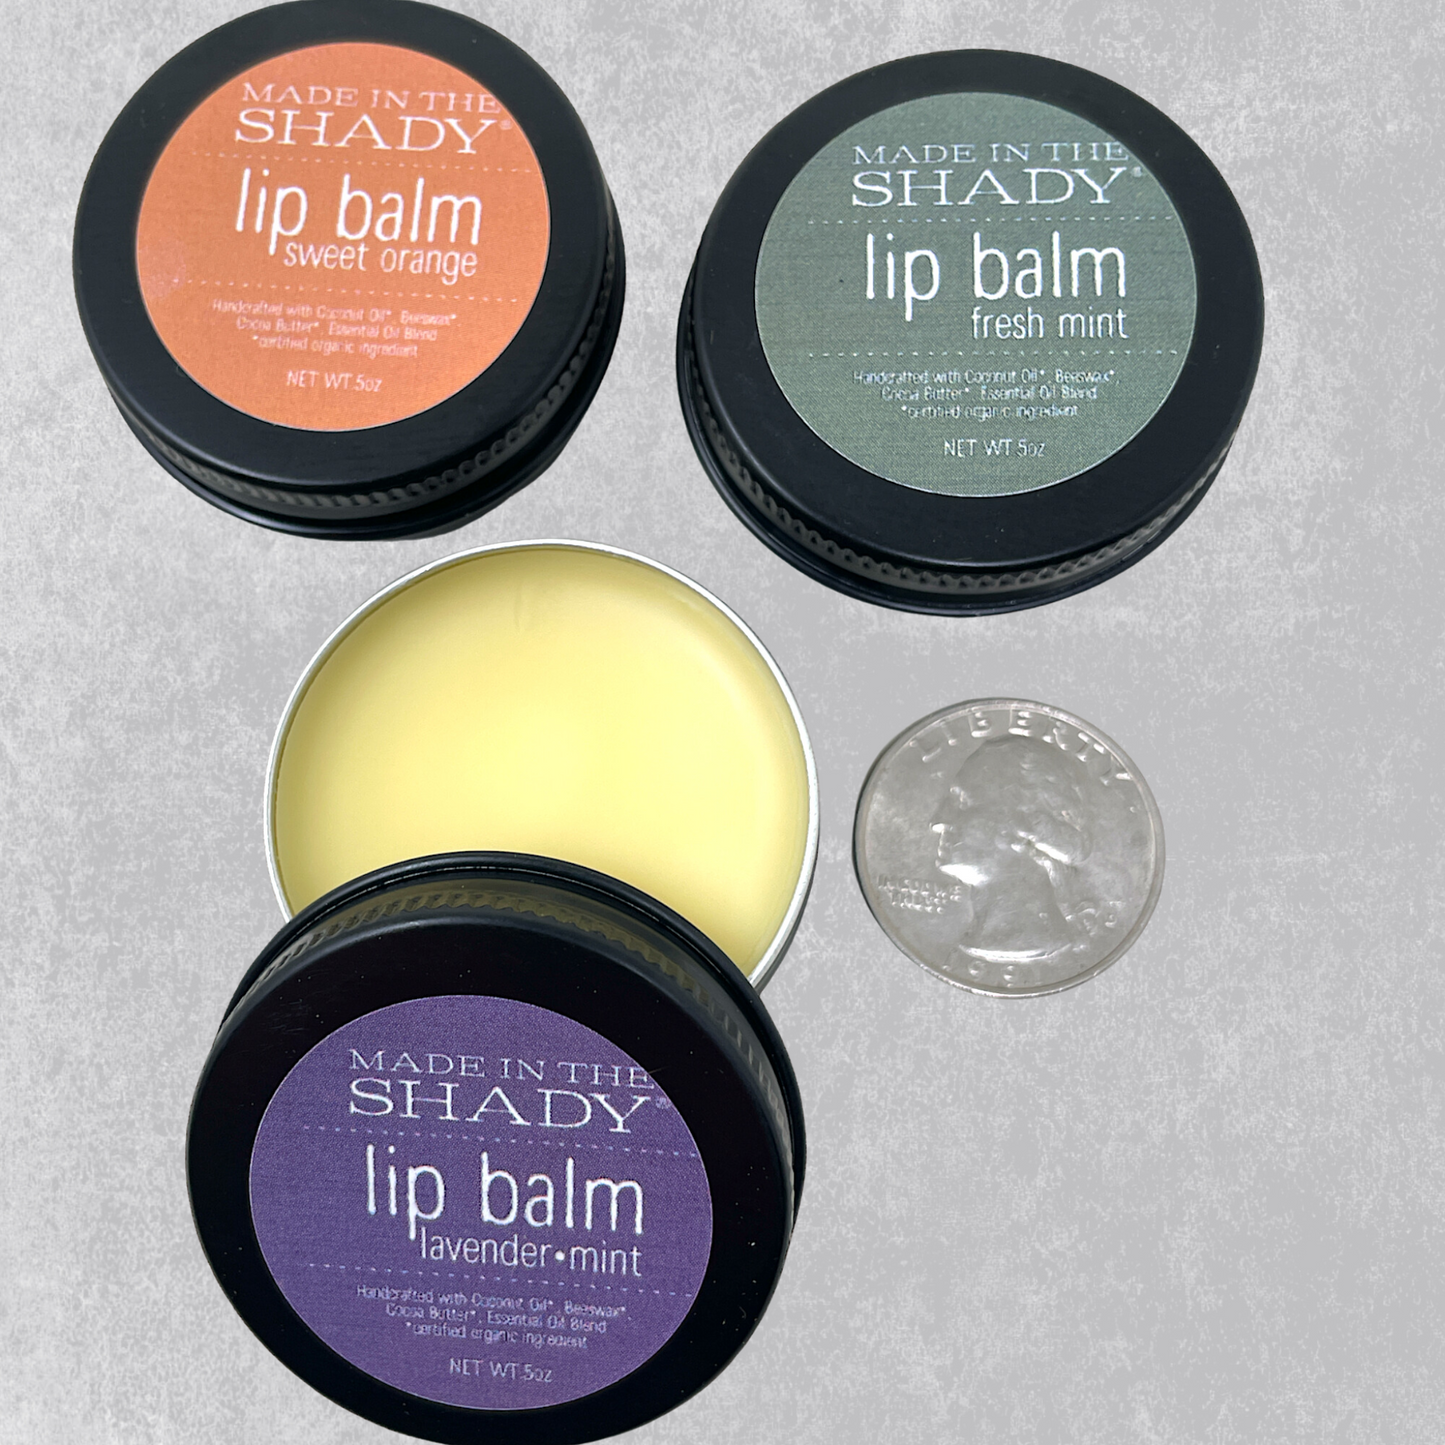 Lip Balm Tins | Single - OR - Trio - Your Choice!